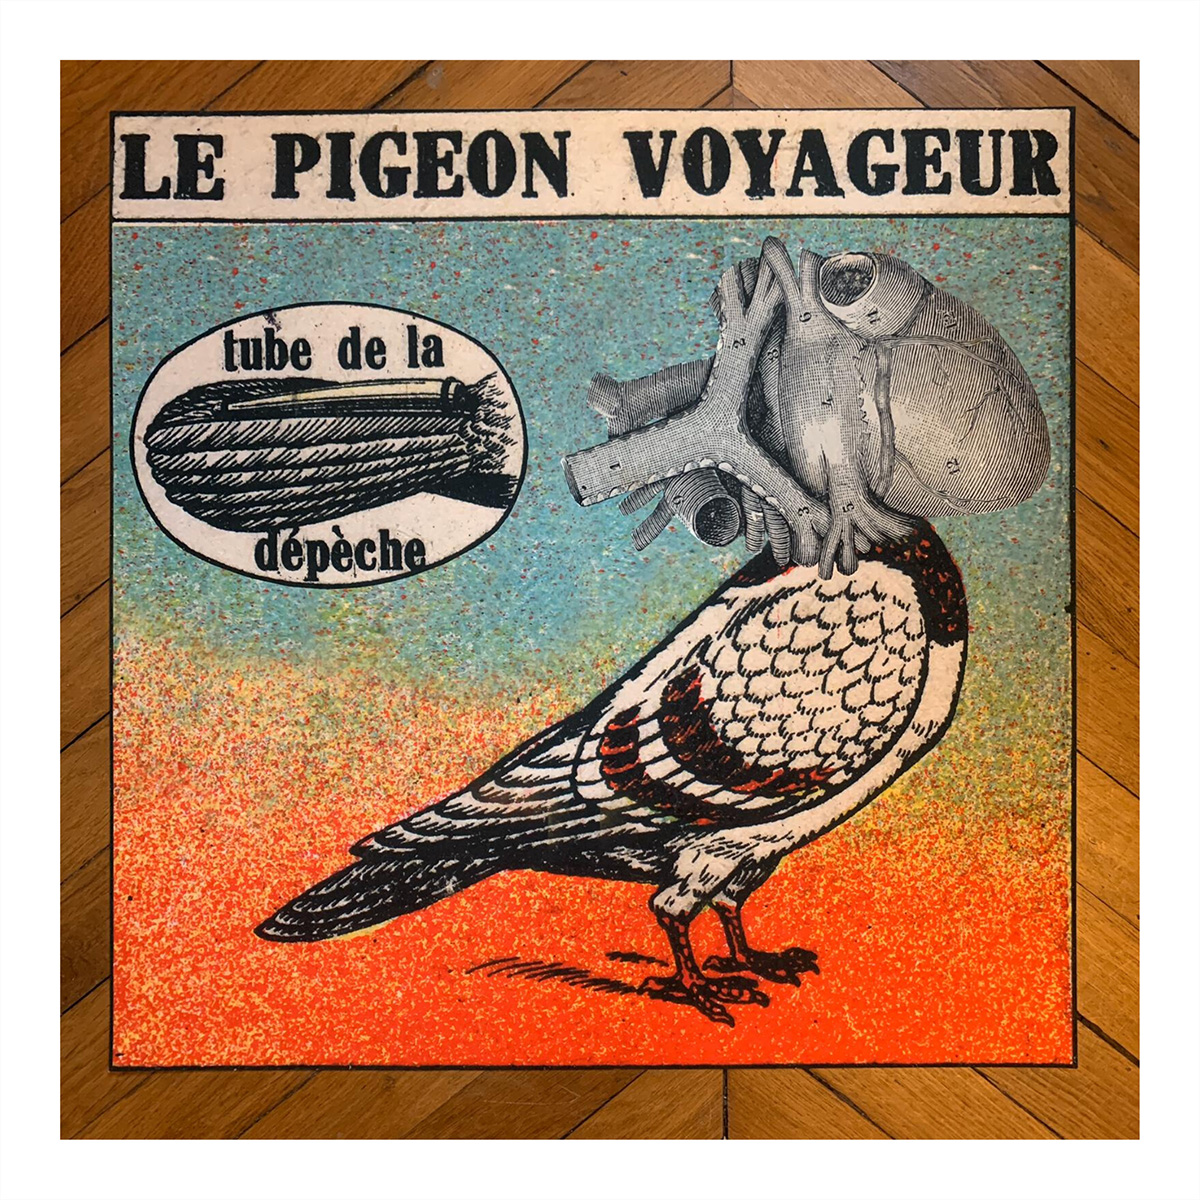 Madame Print Le pigeon voyageur